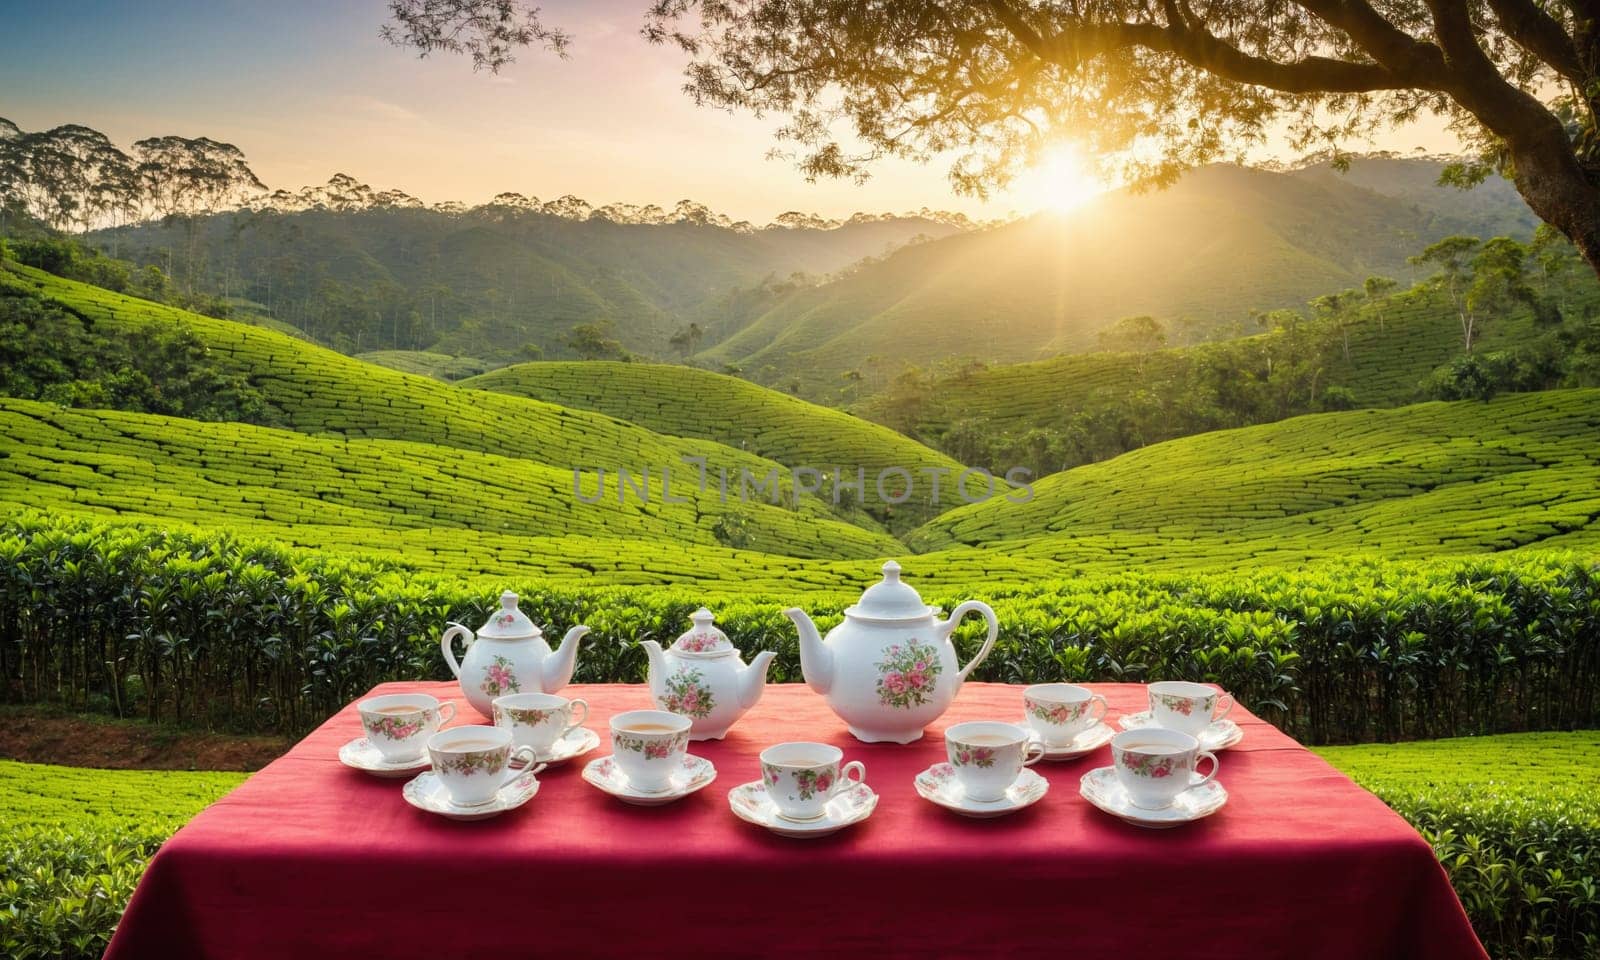 Tea drinking among tea plantations.